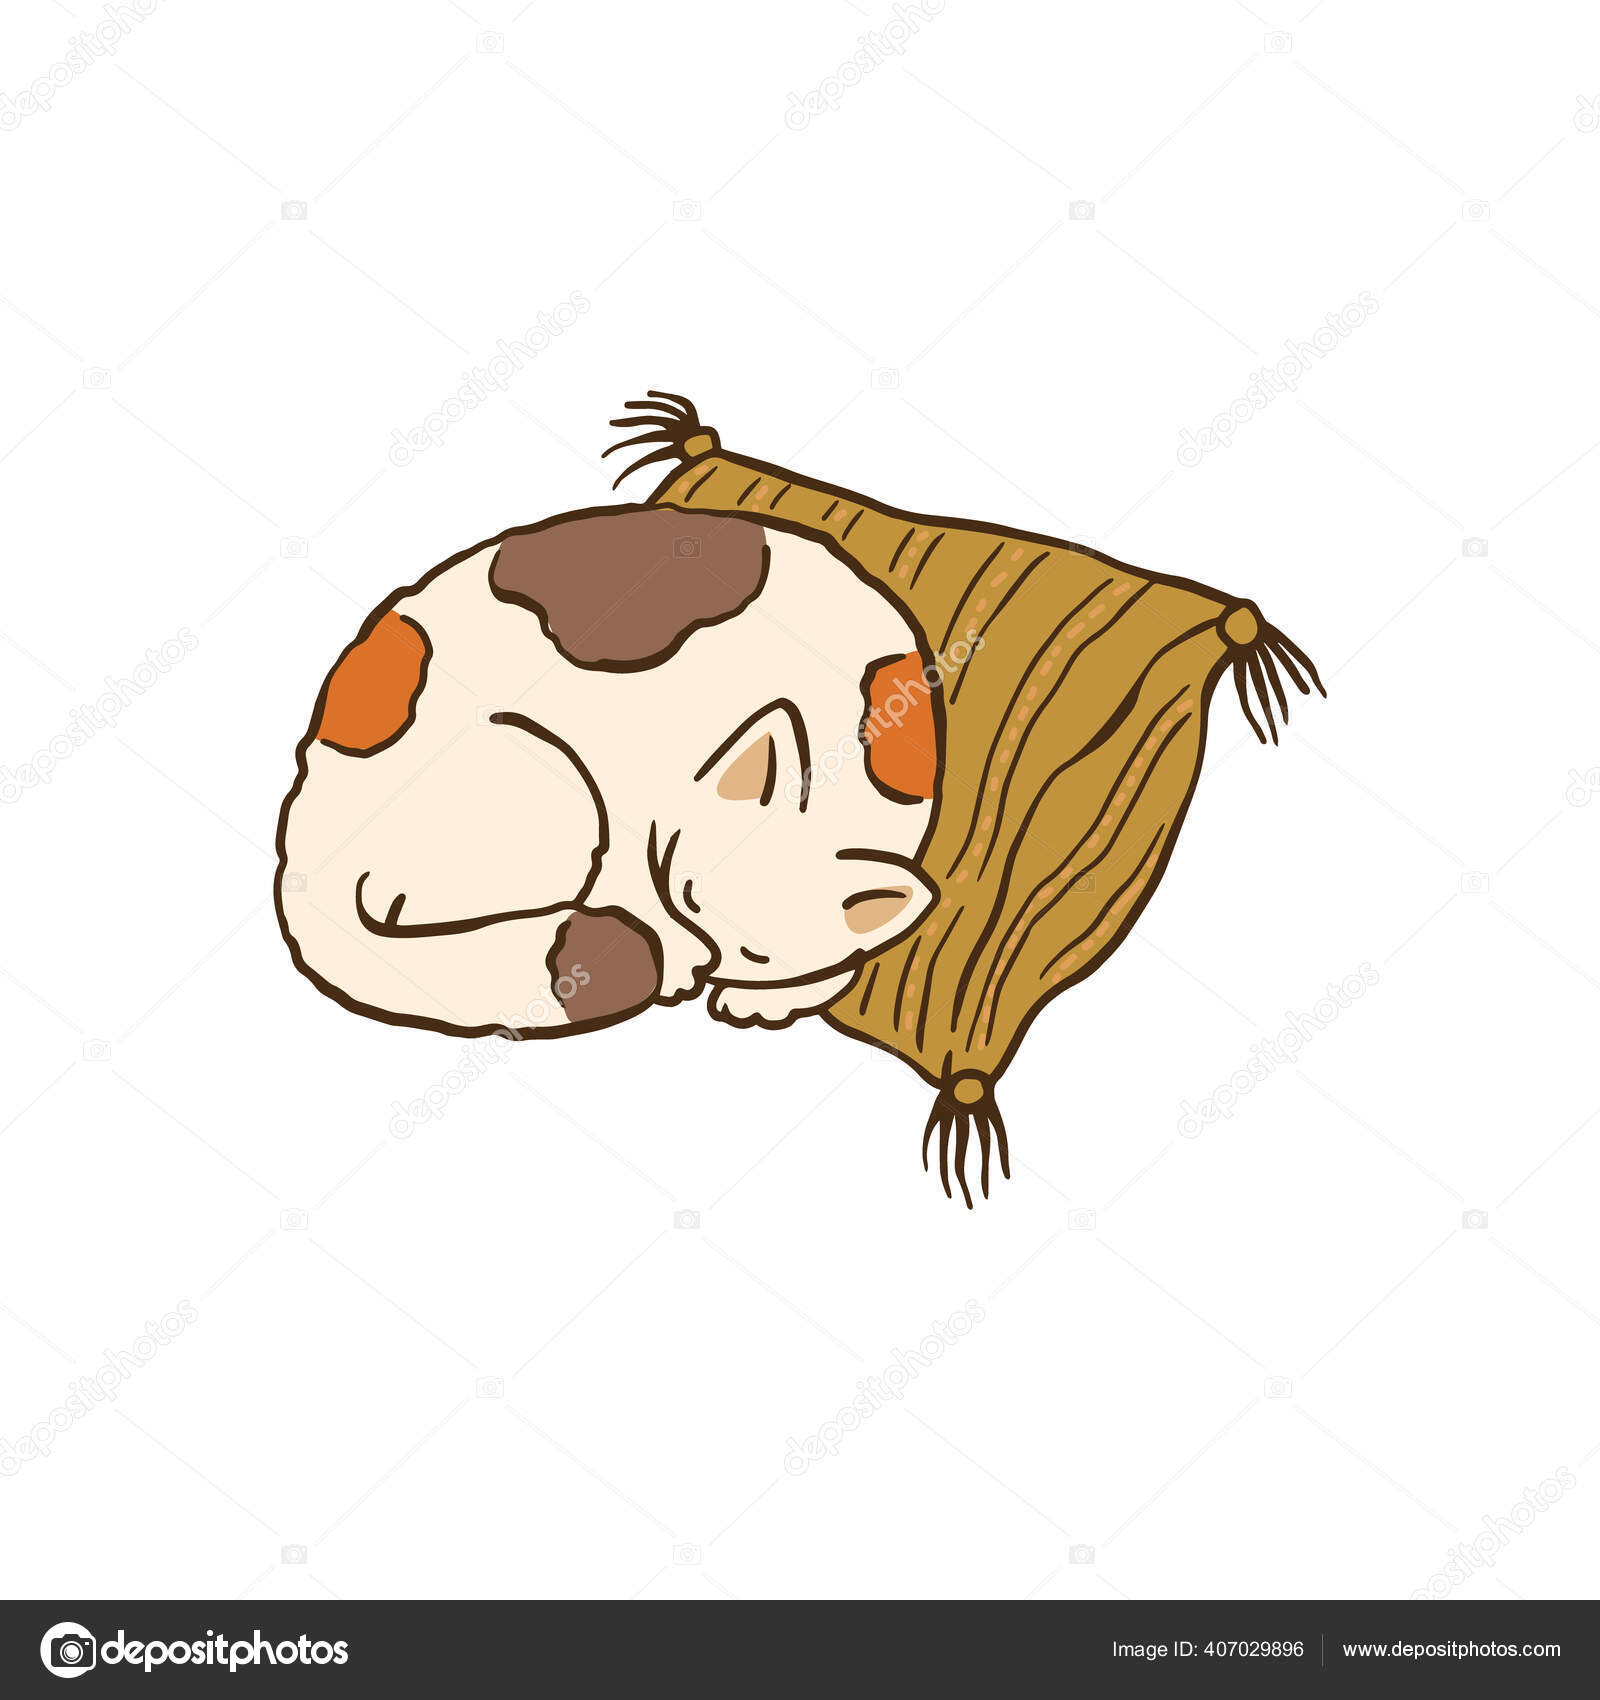 Cute Cat Sleeping On Pillow Cartoon Vector Icon Illustration. Flat